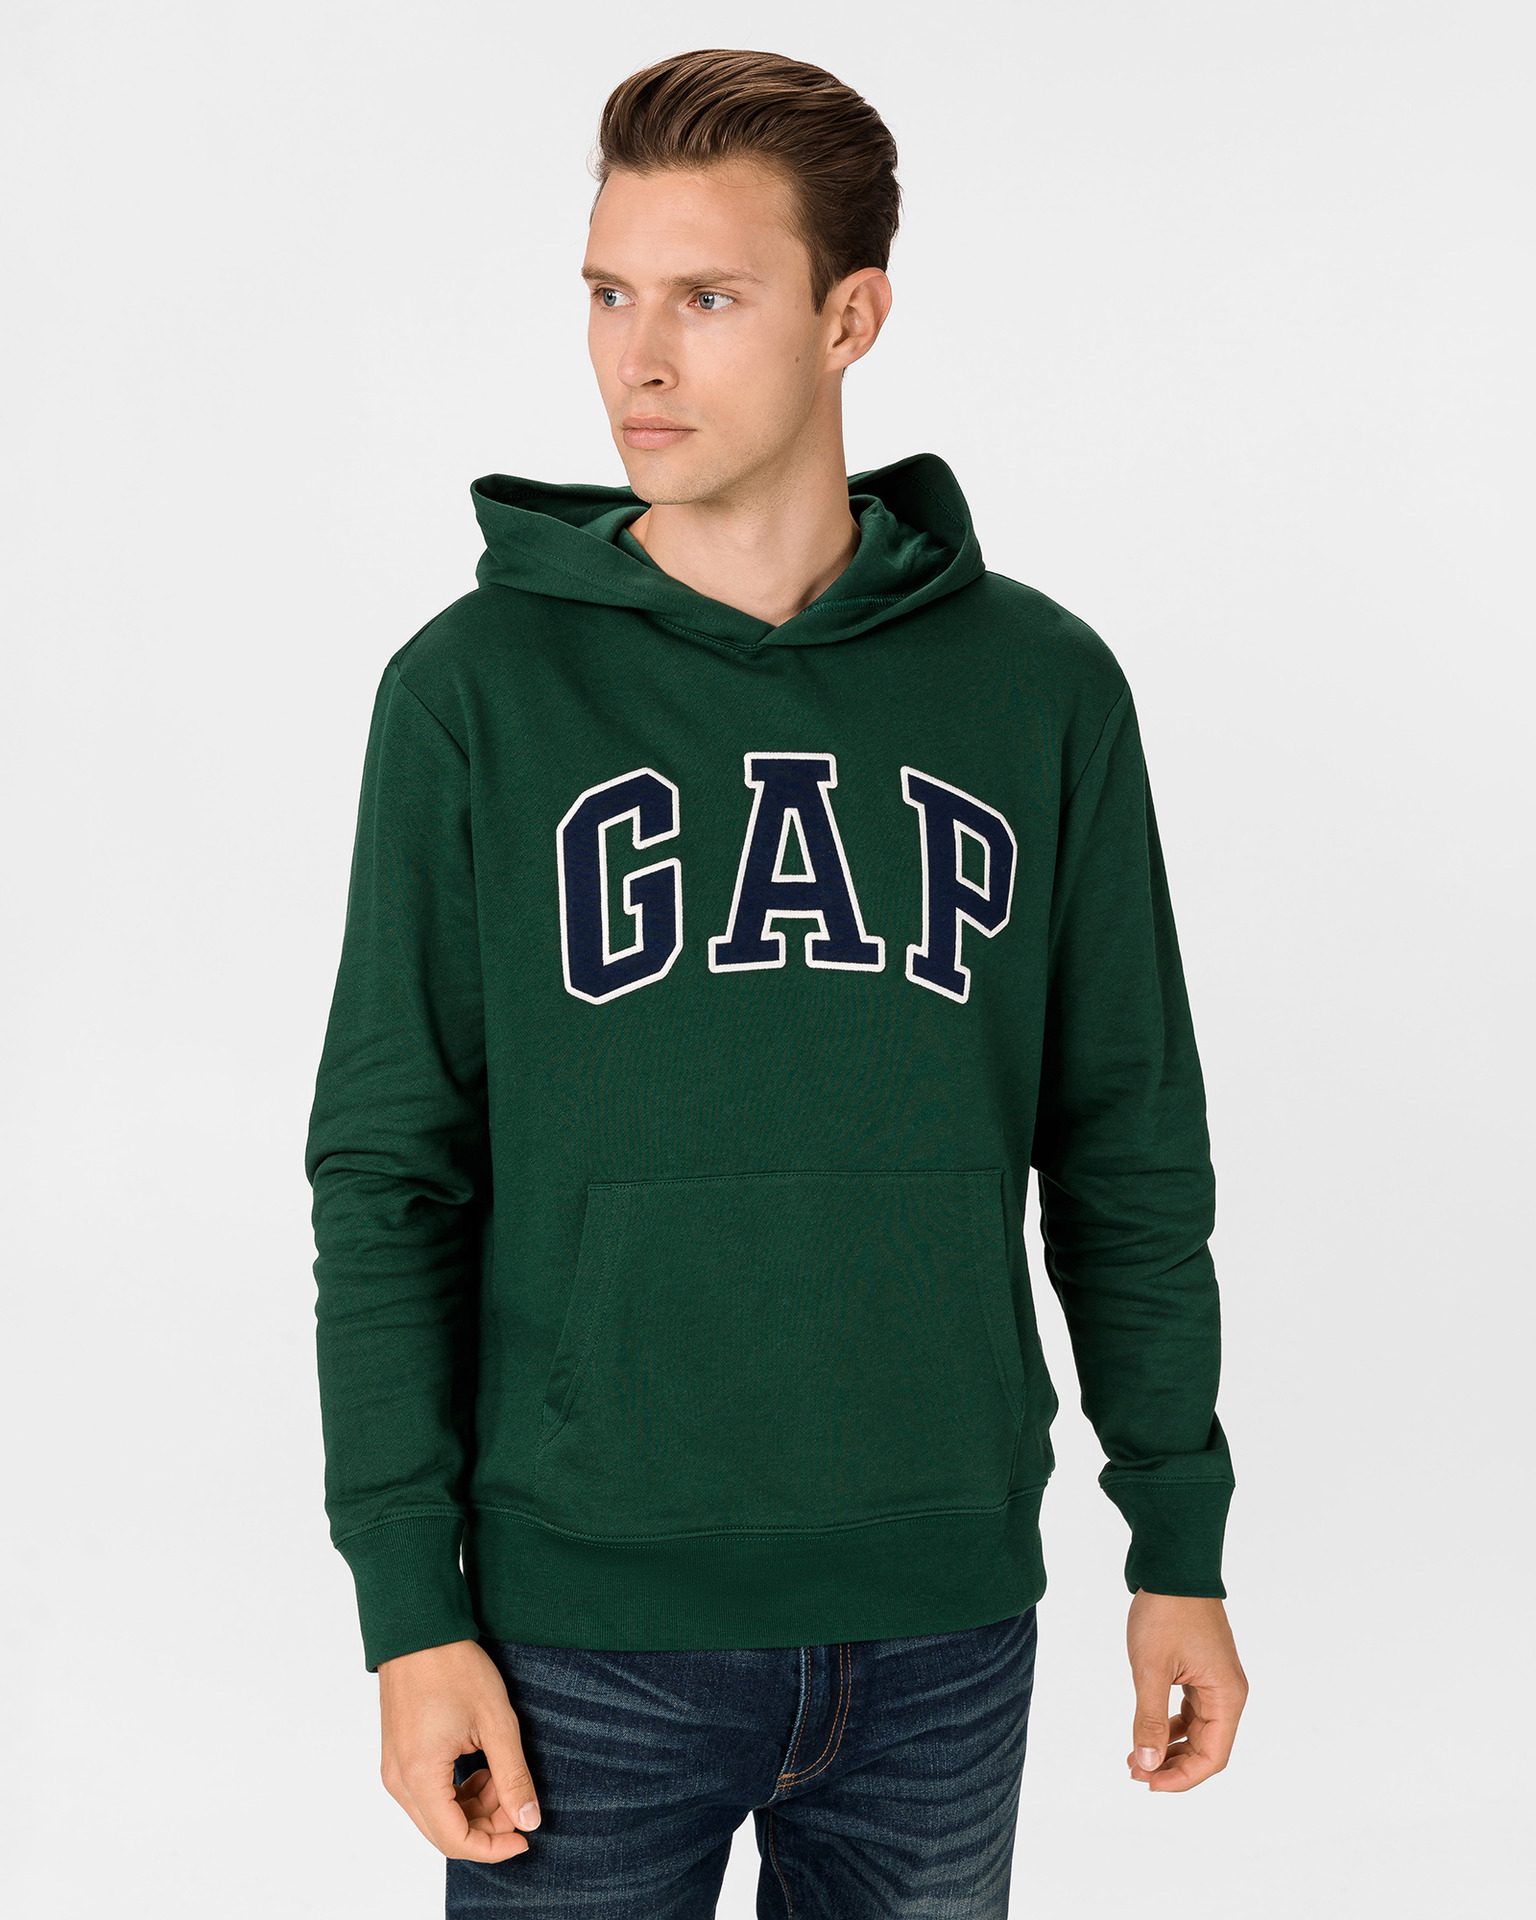 Support gap. Gap Sweatshirt. Зеленый гап.